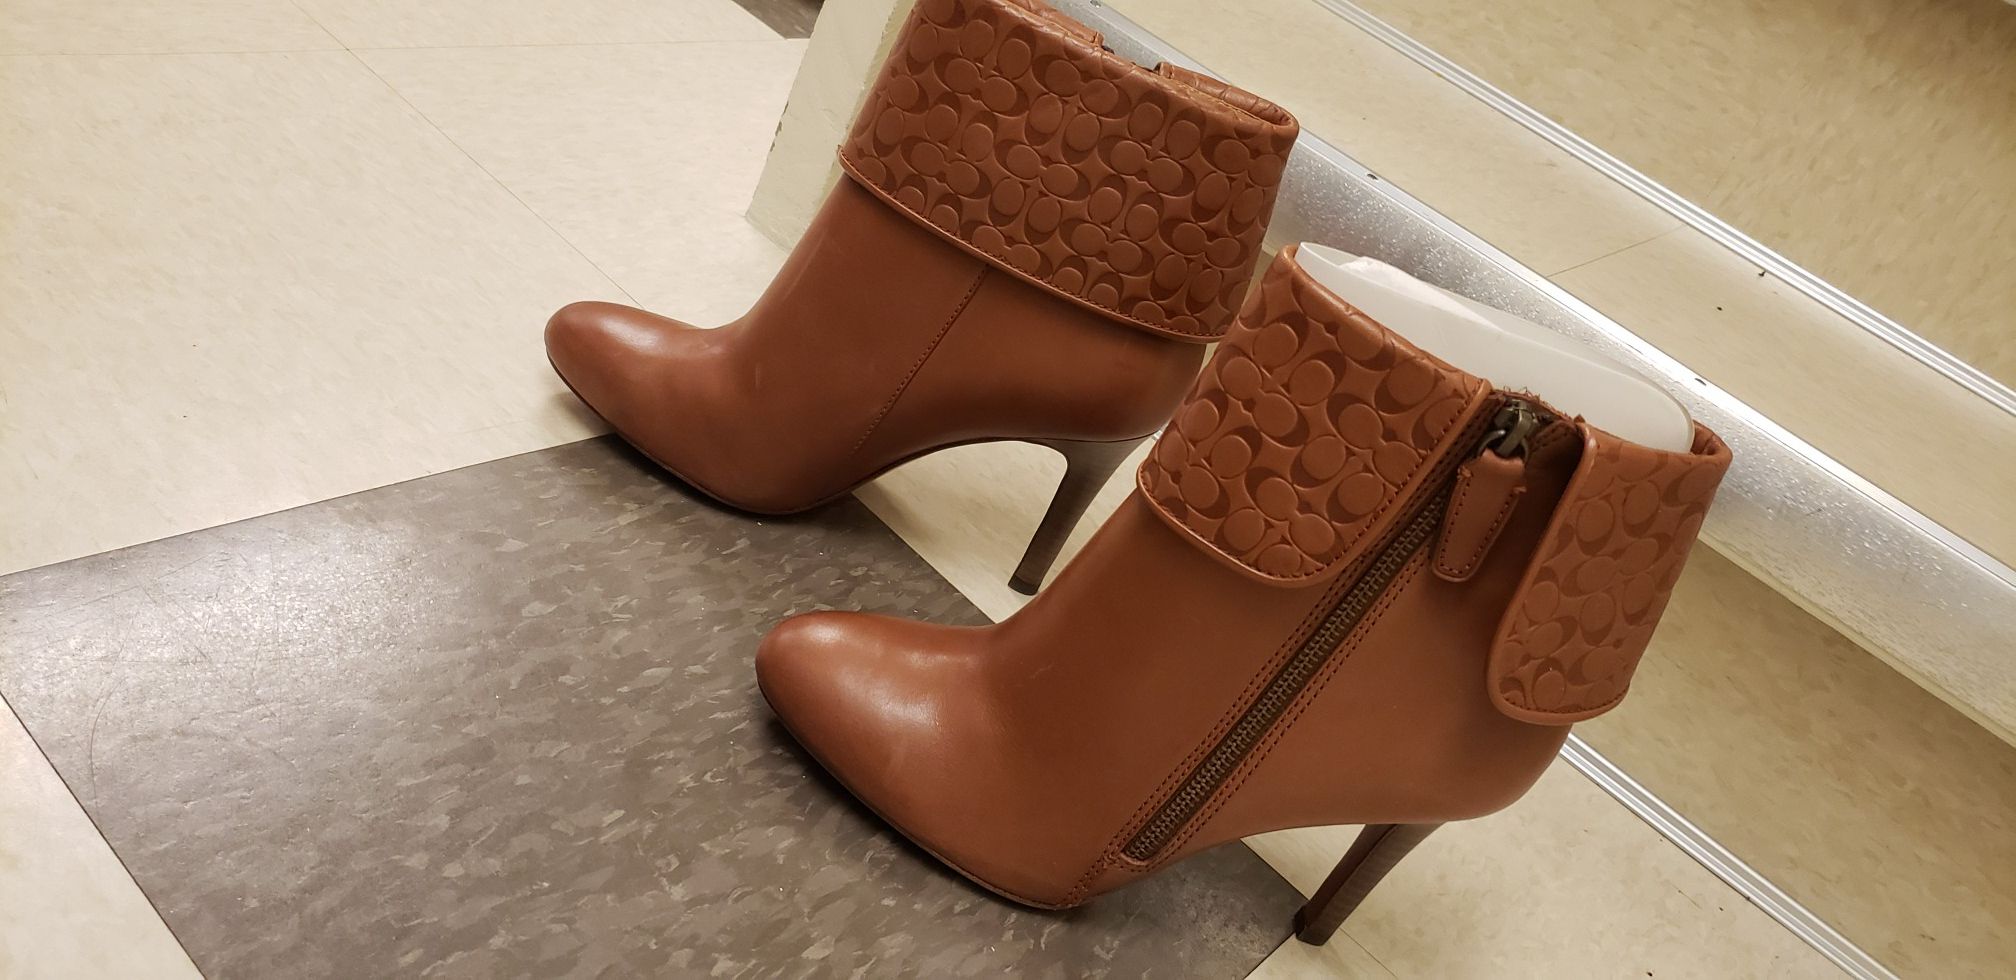 COACH women's boot size 8